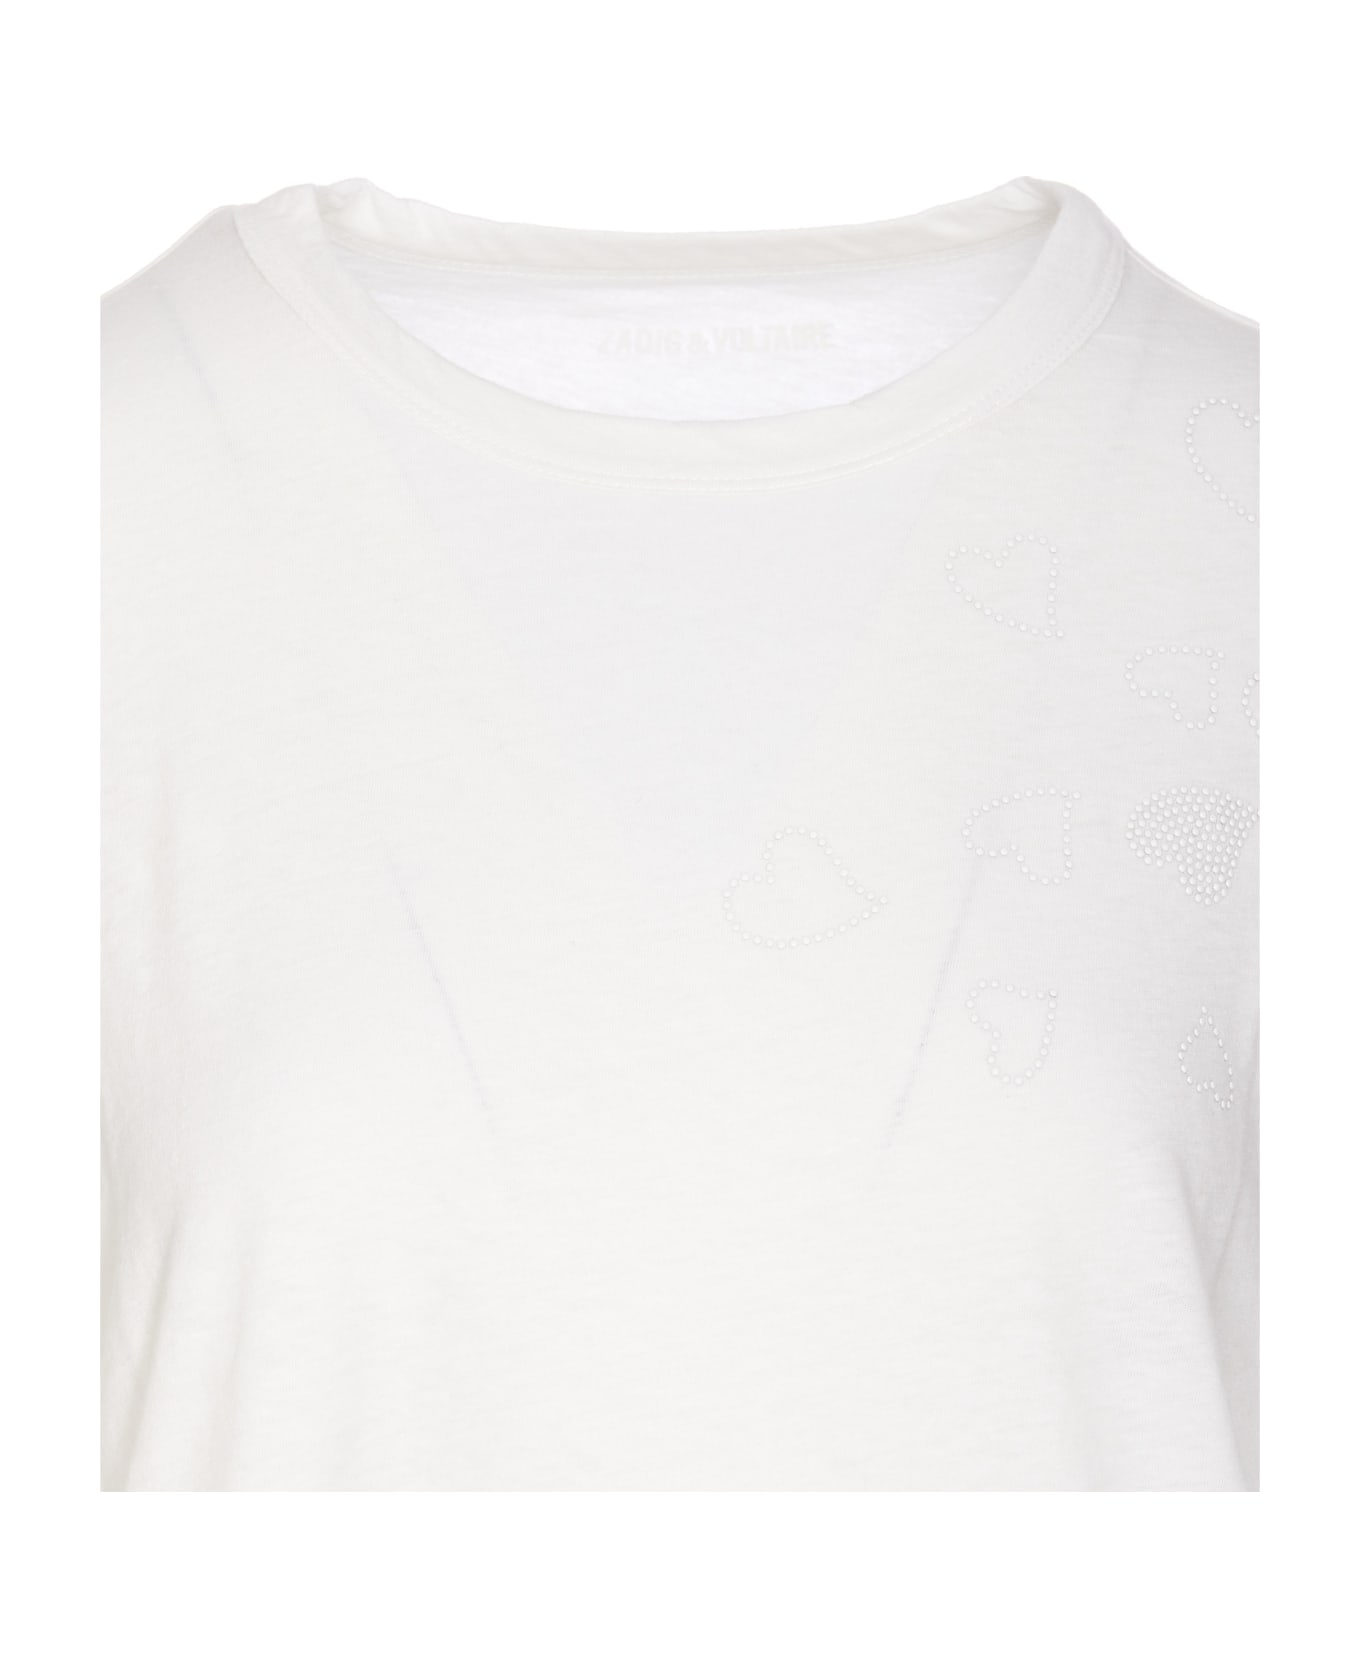 Zadig & Voltaire Anya Rain Stud T-shirt - White Tシャツ